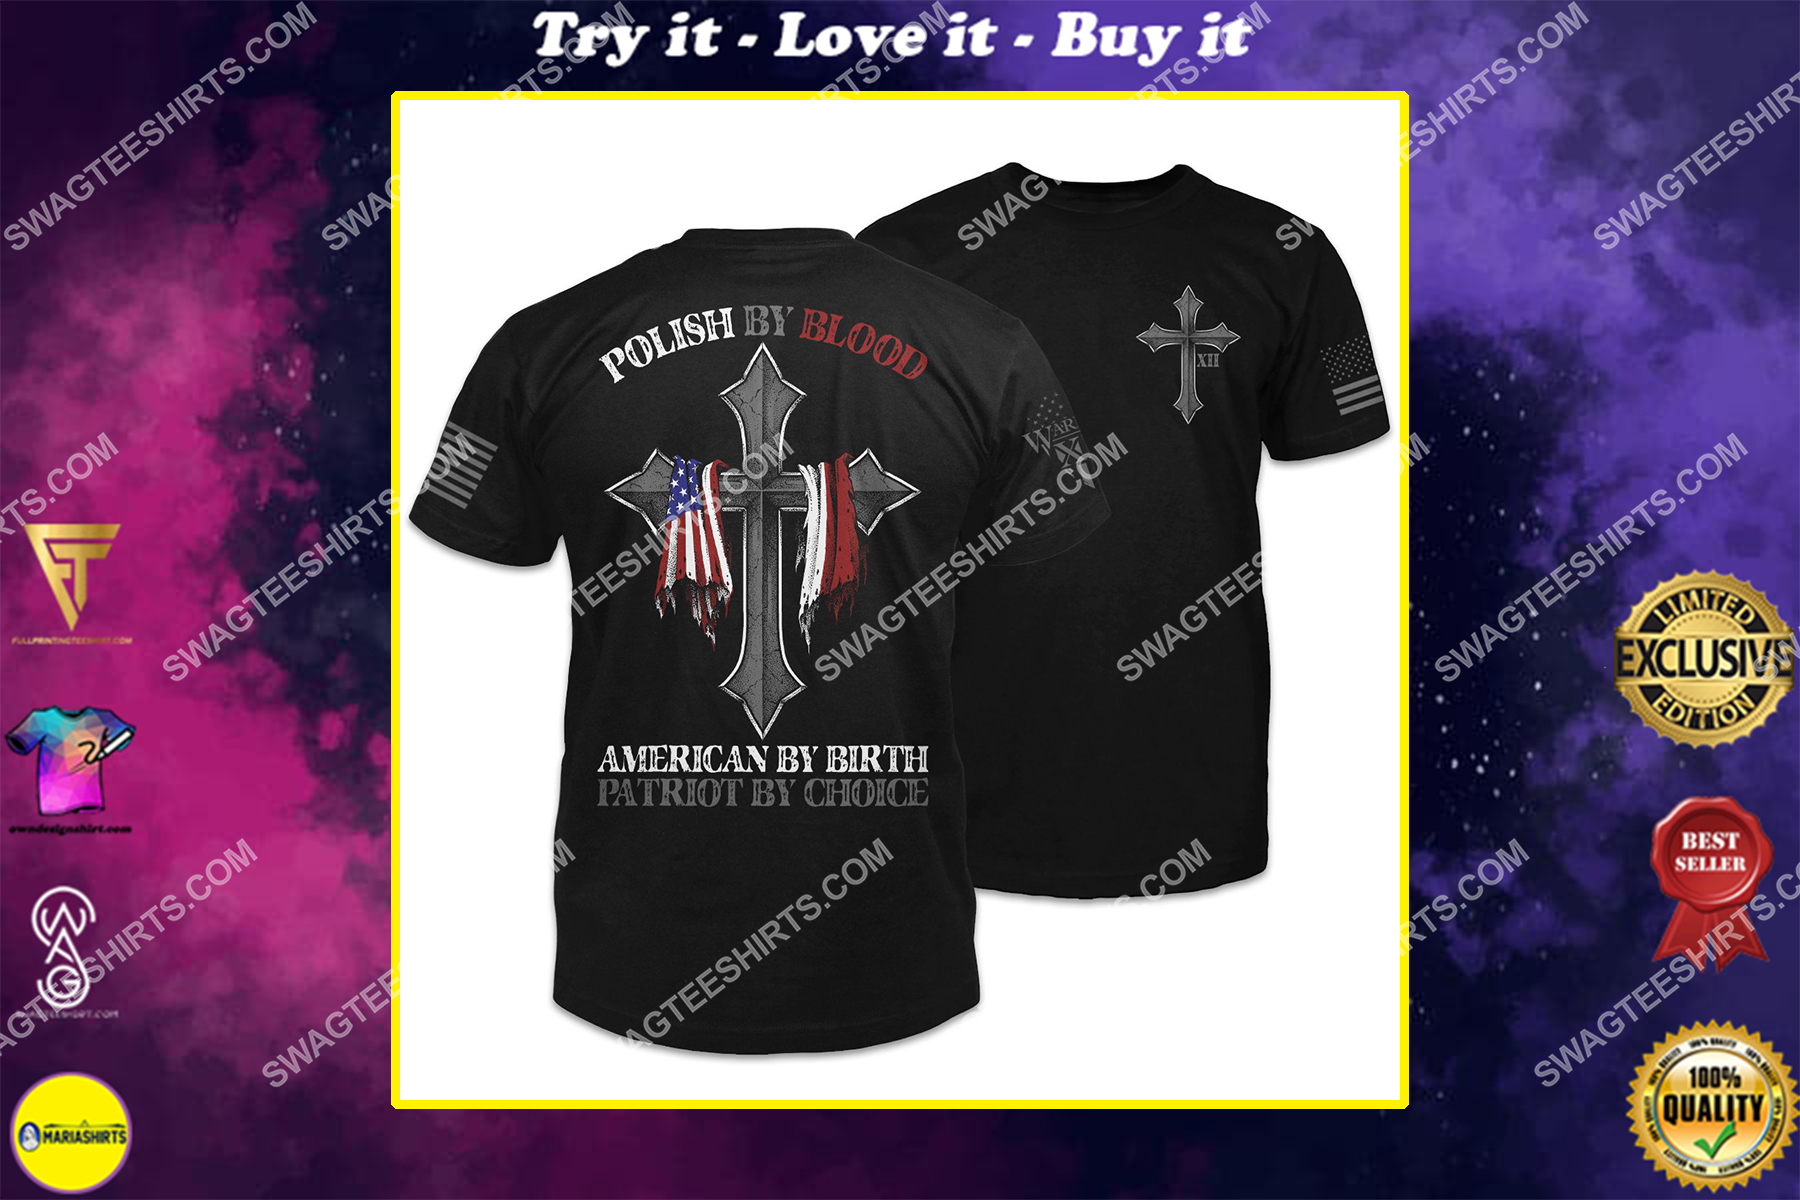 polish by blood american by birth patriot by choice shirt